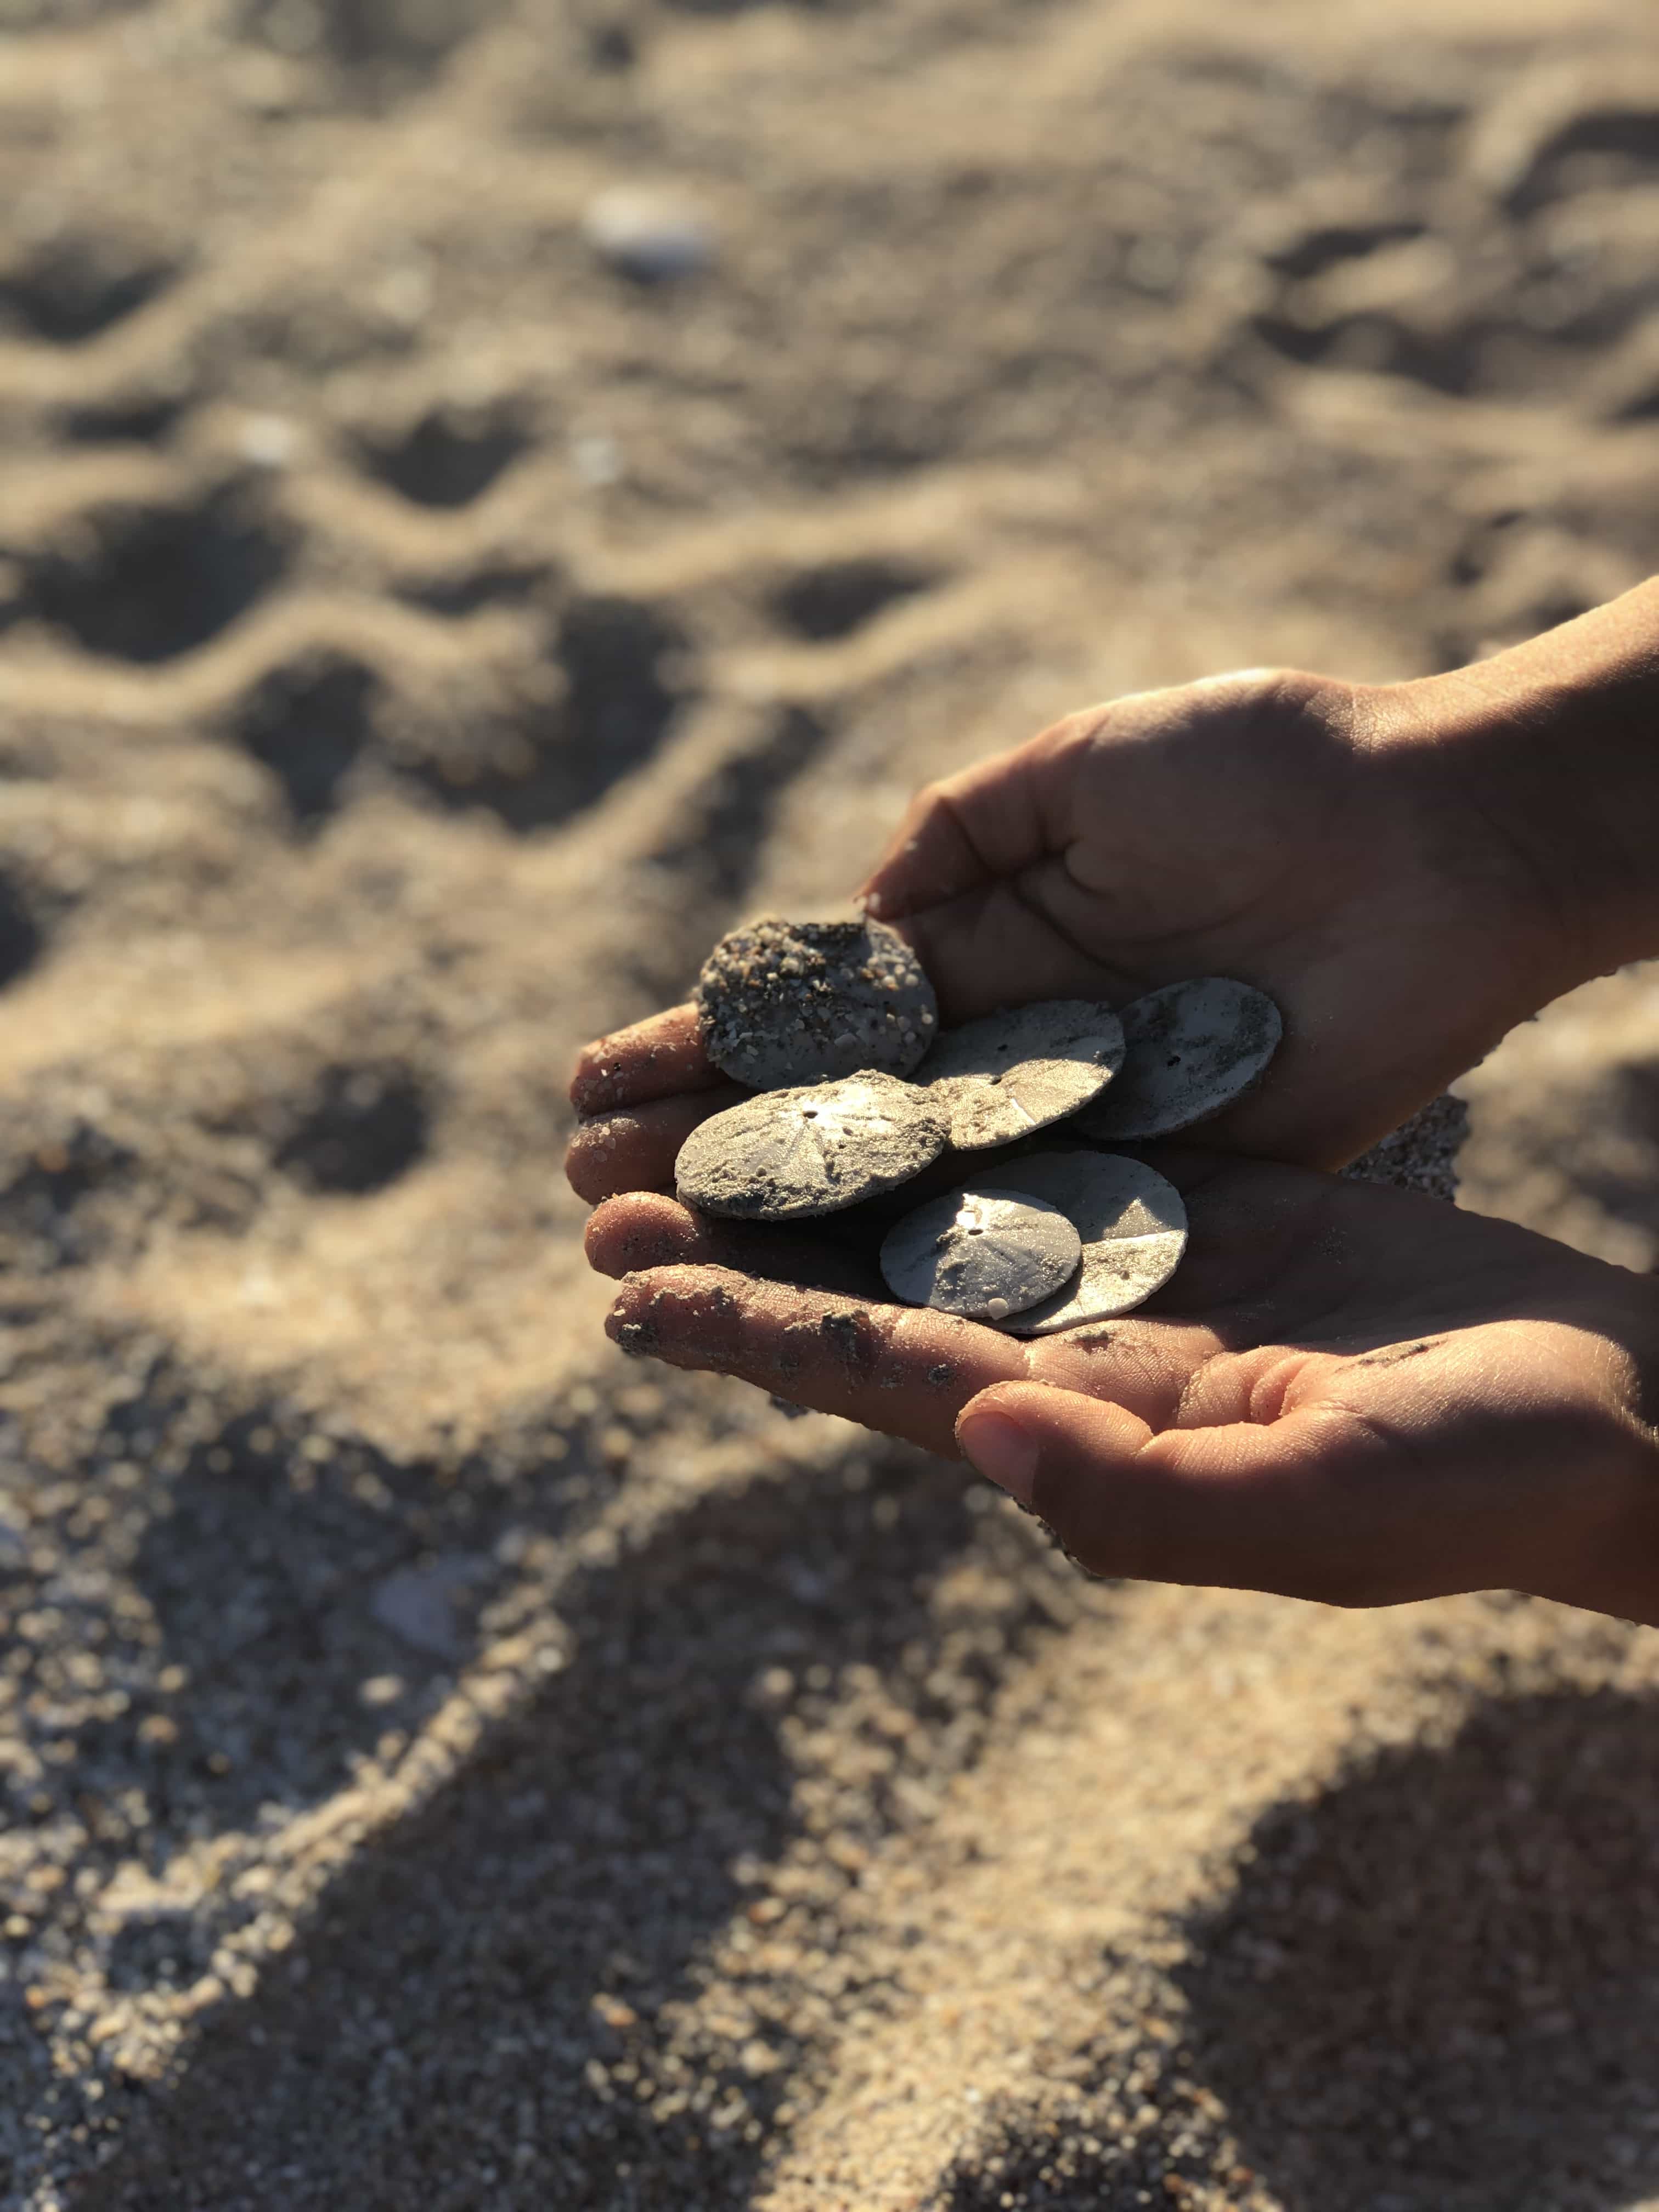 Finding sand dollars